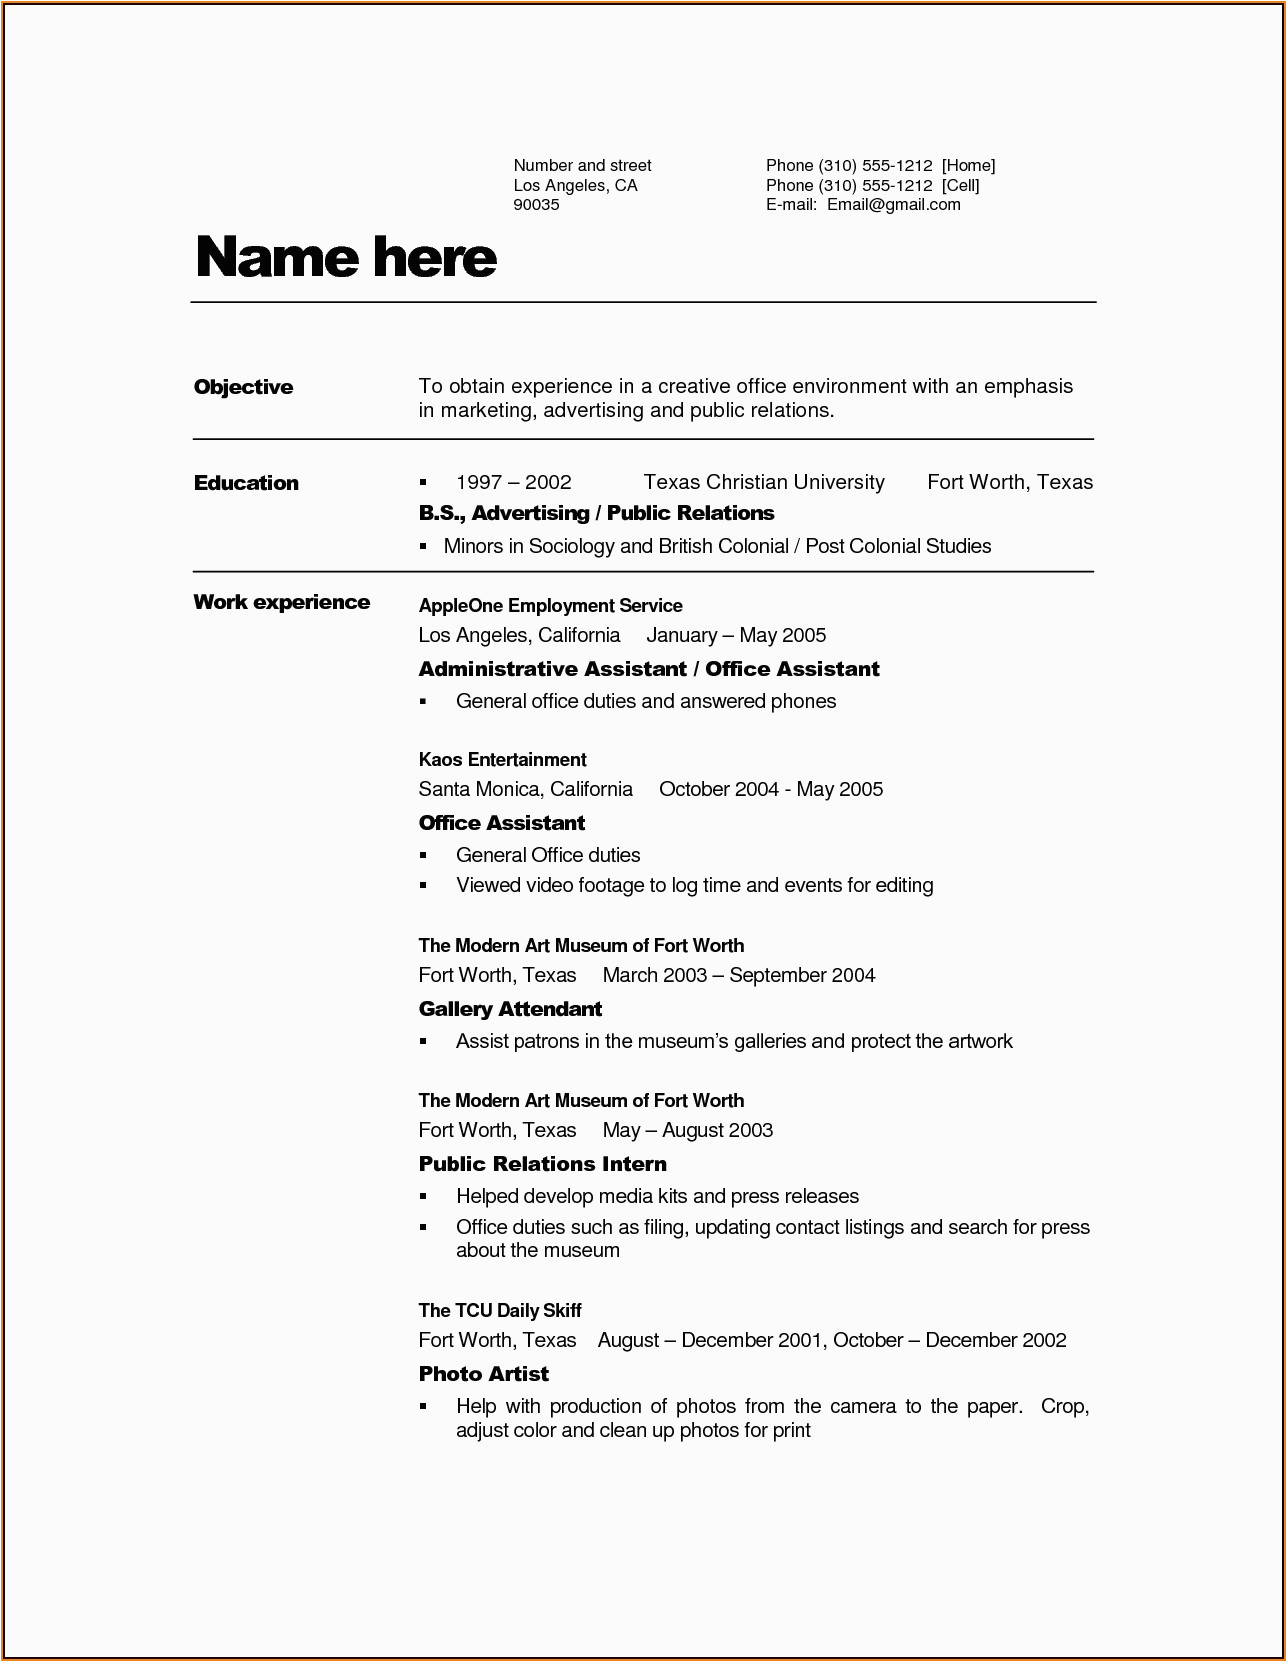 Sample Resume for Australian It Jobs Simple Resume format Australia Resume Templates Basic Basic Job